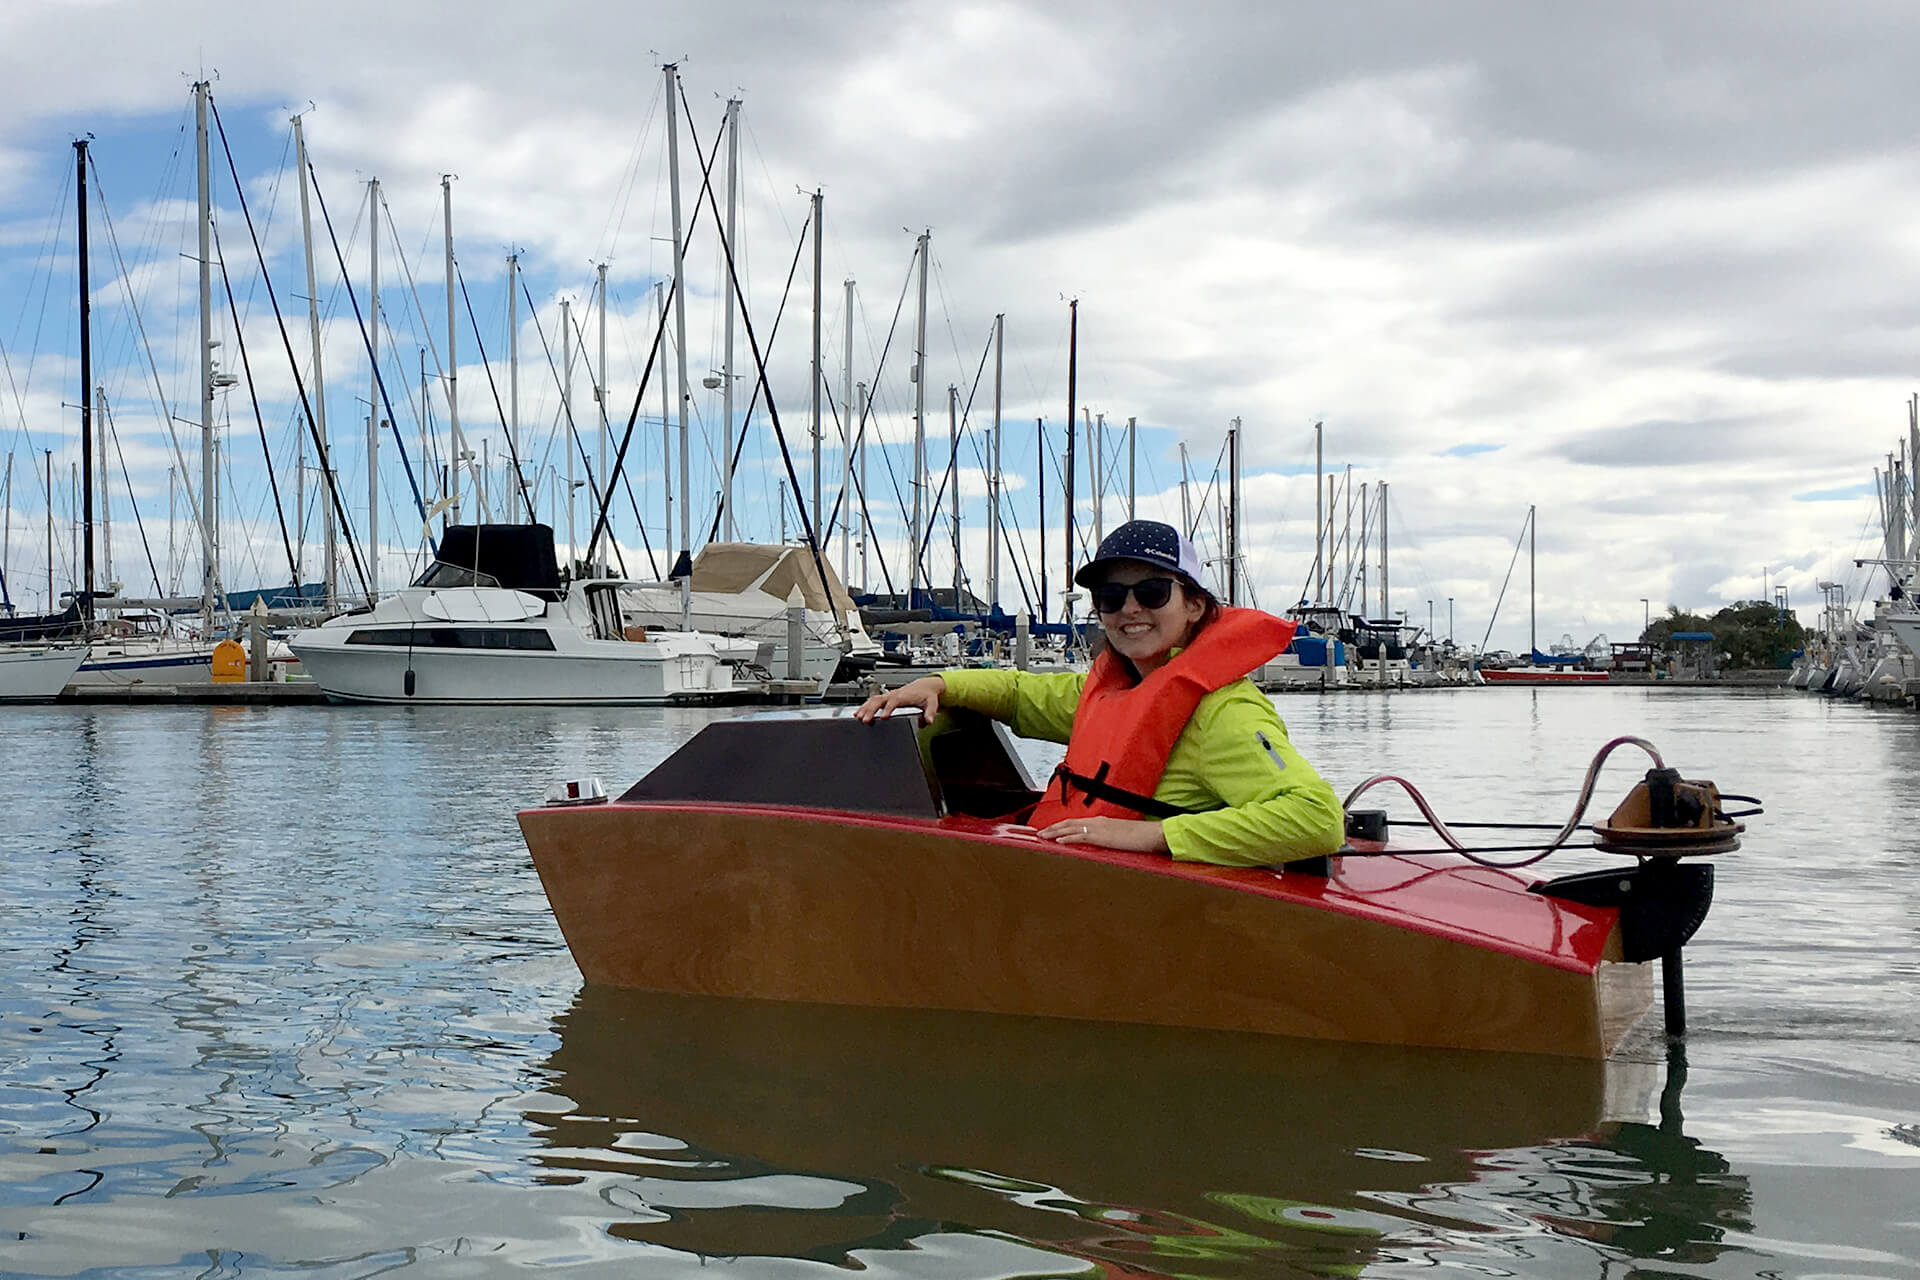 JuliAnn in a mini boat at the Emeryville harbor